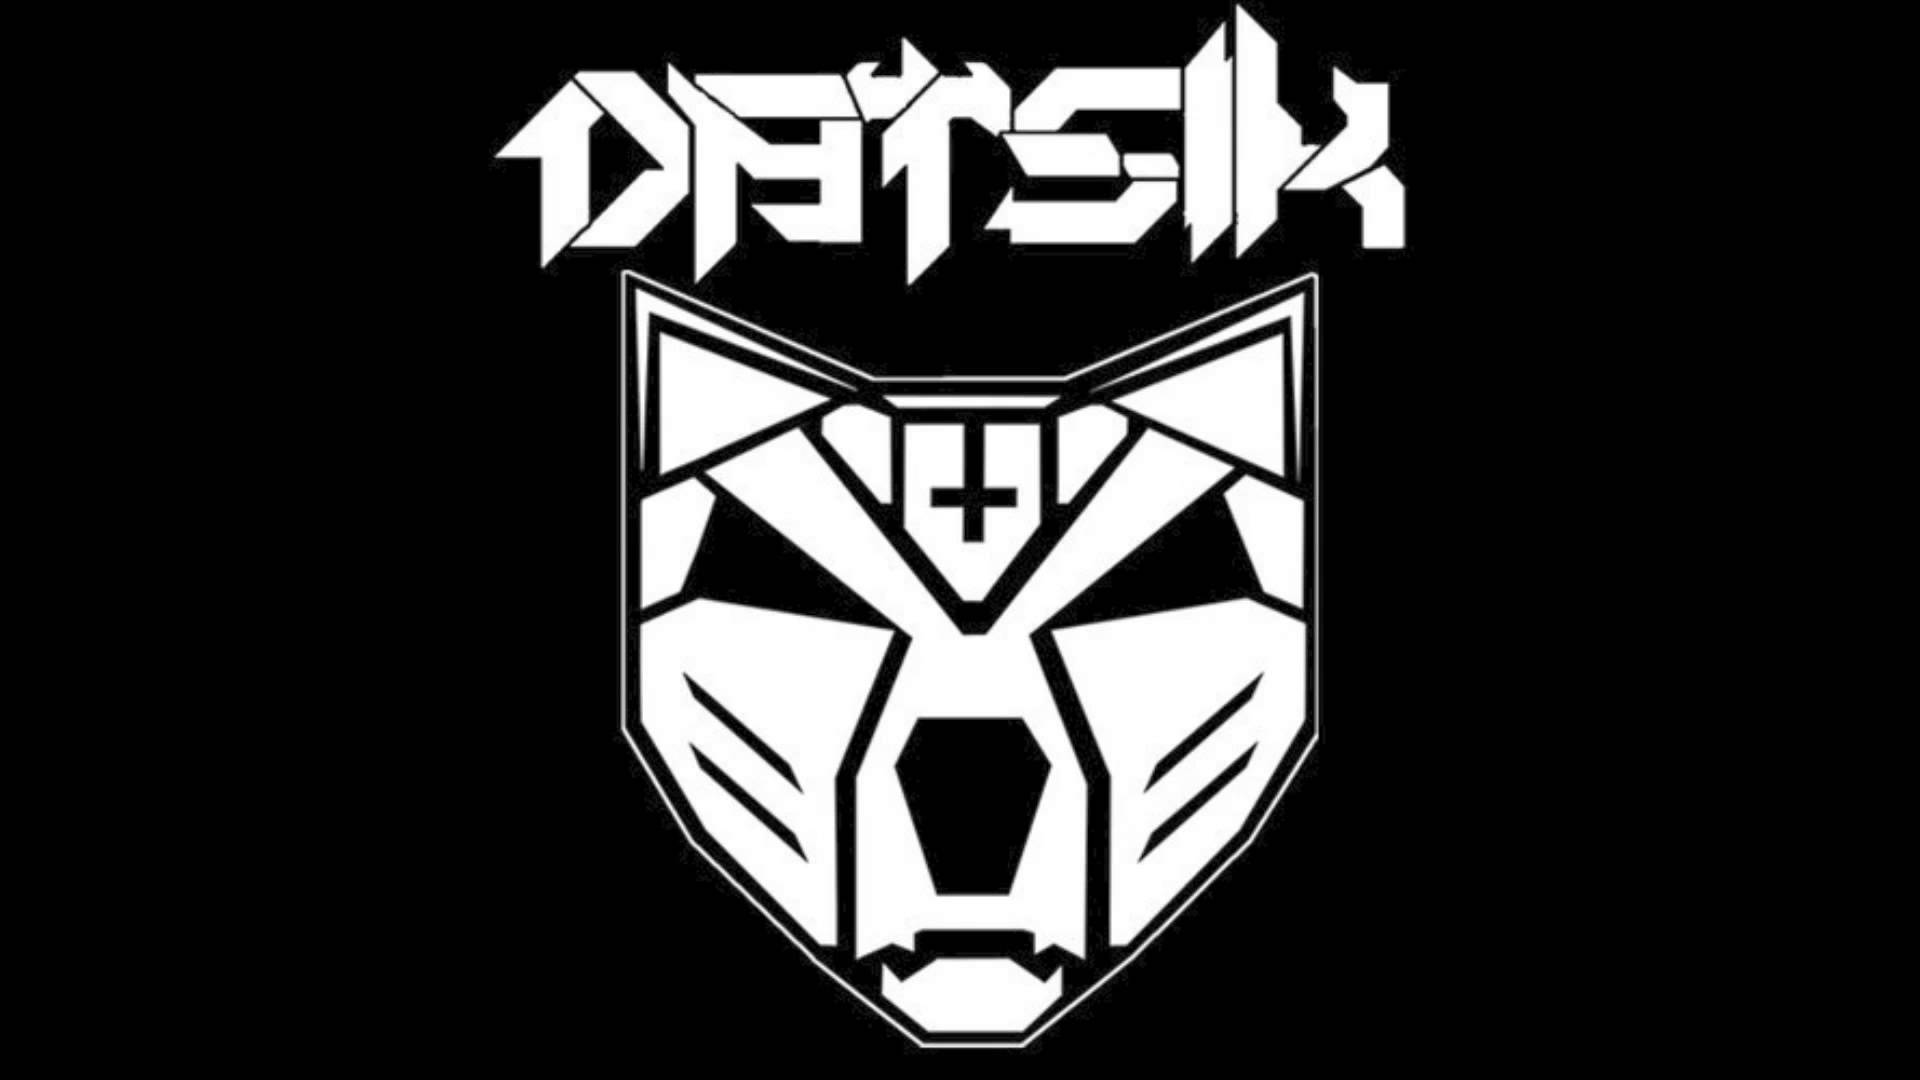 Datsik - Fully Blown Feat. Snak The Ripper TyGr Remix - YouTube